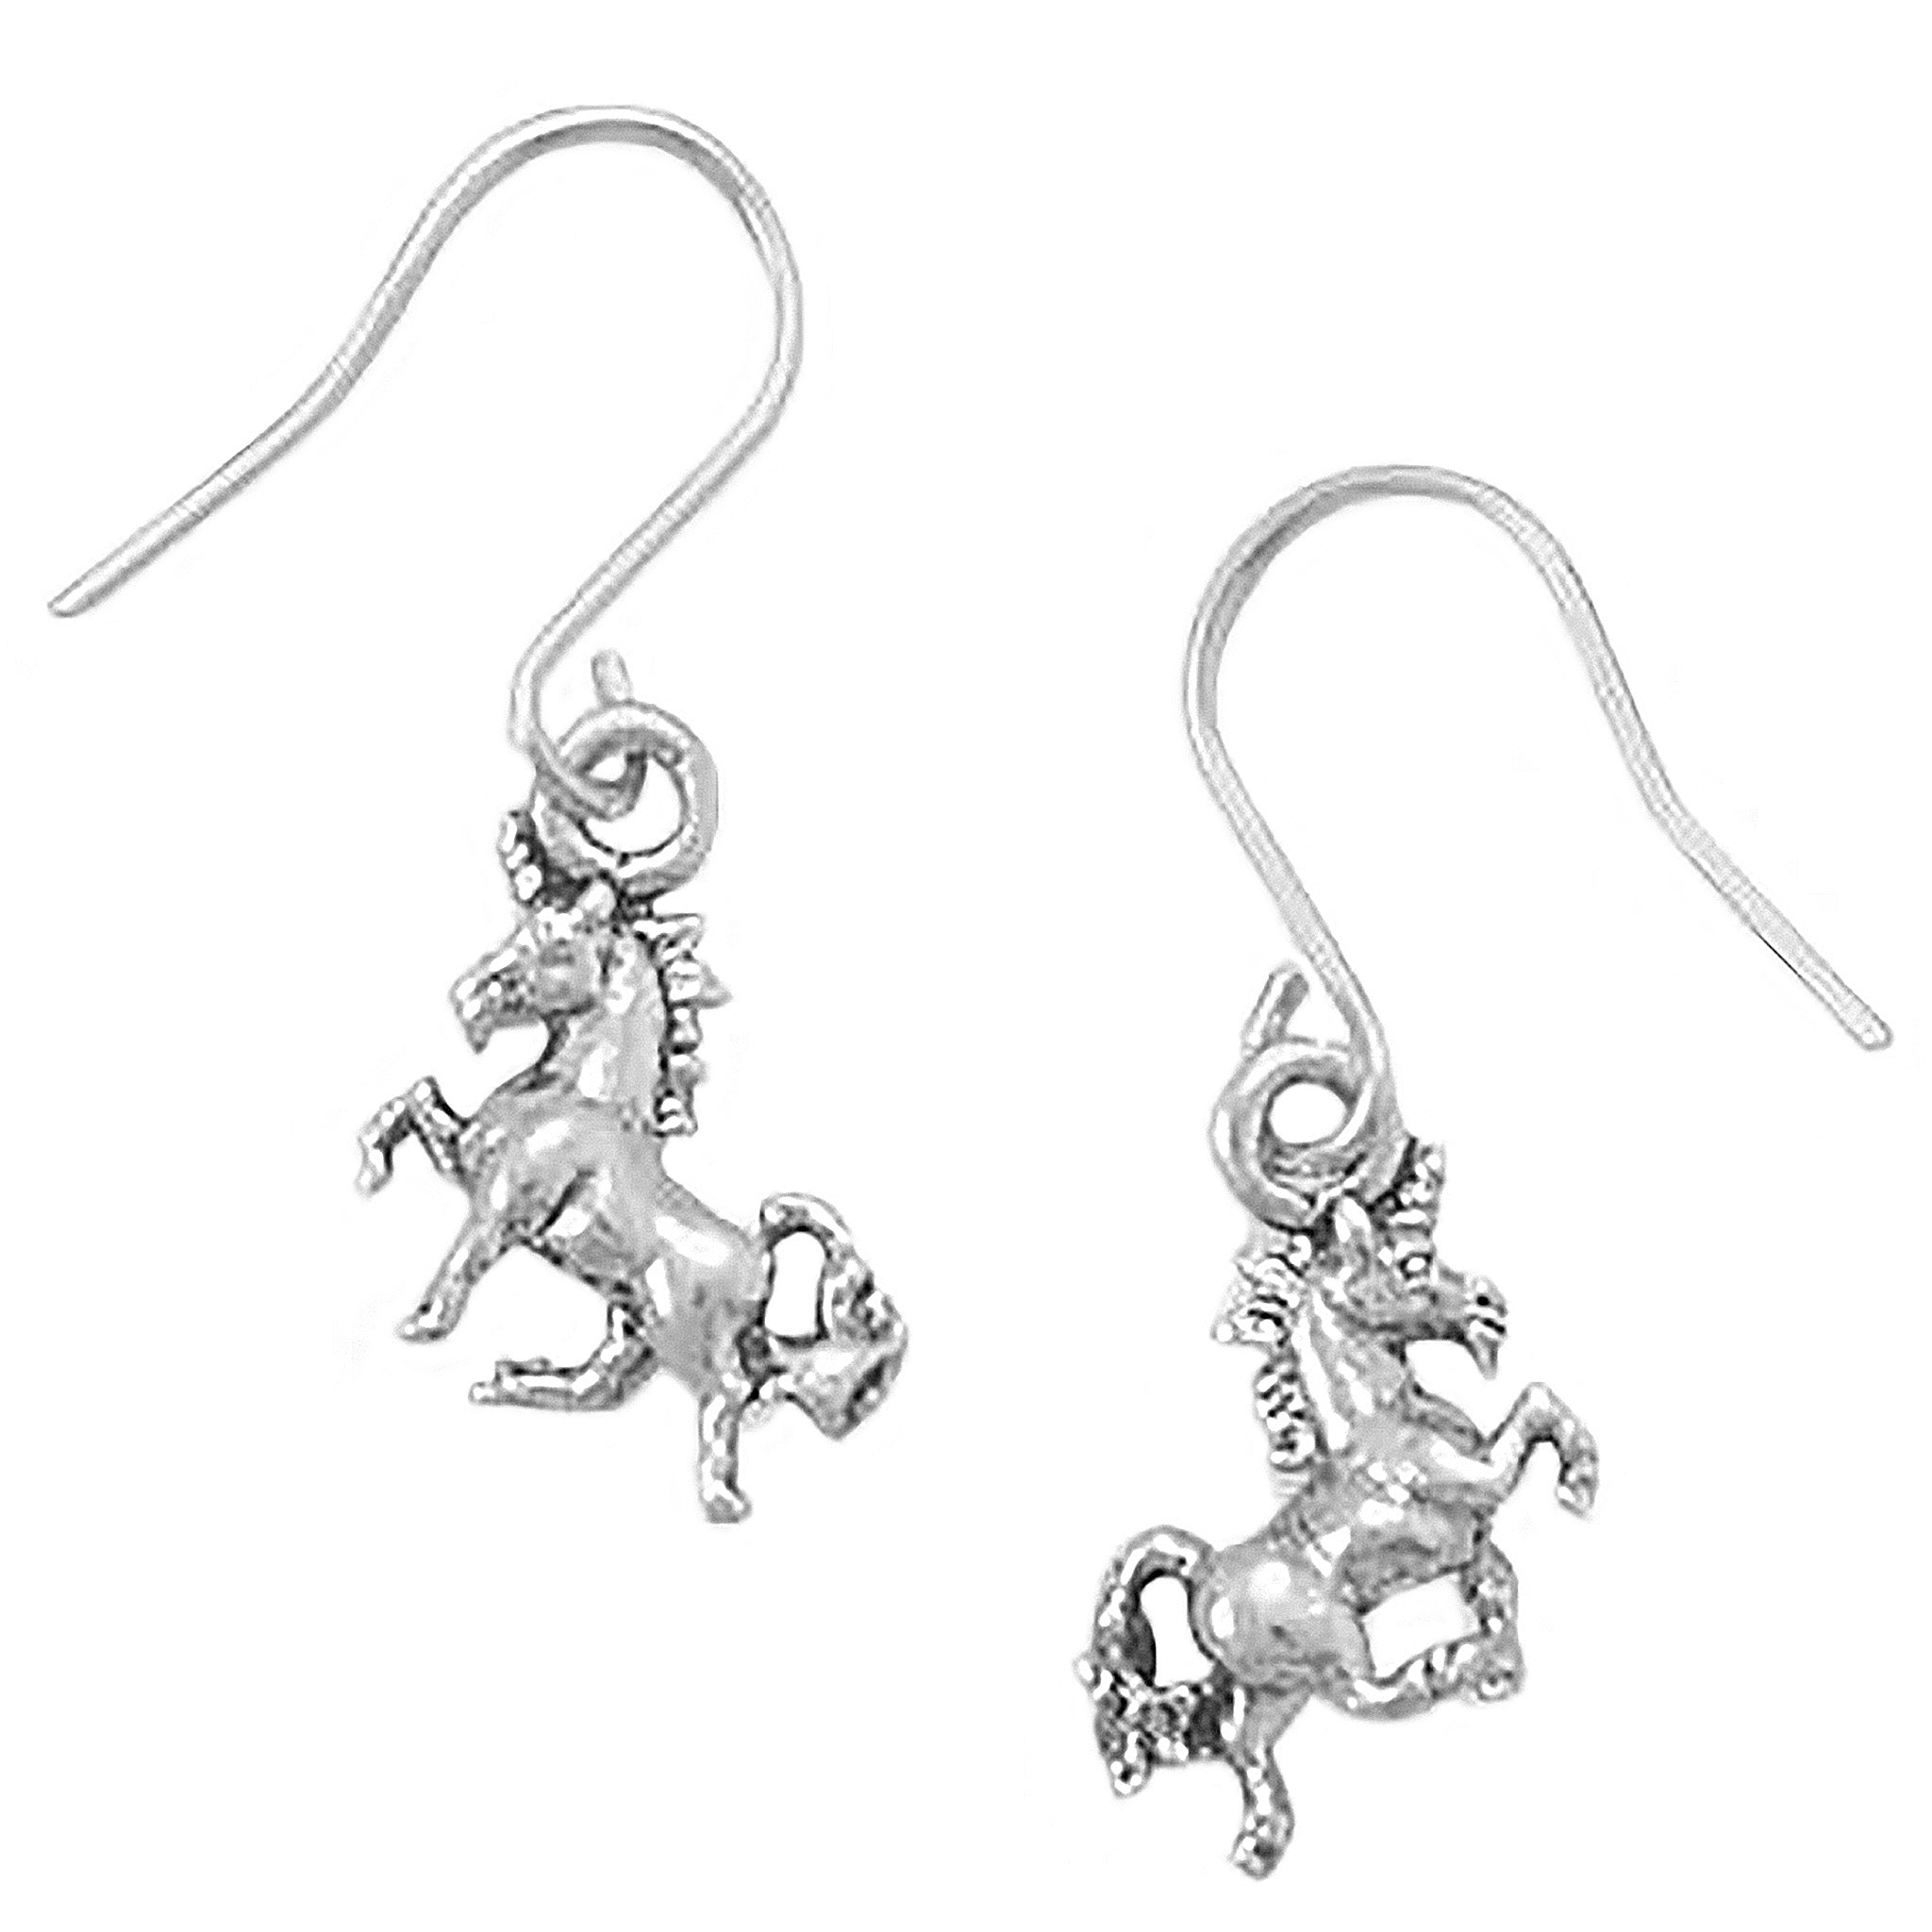 Prancing Unicorn Earrings